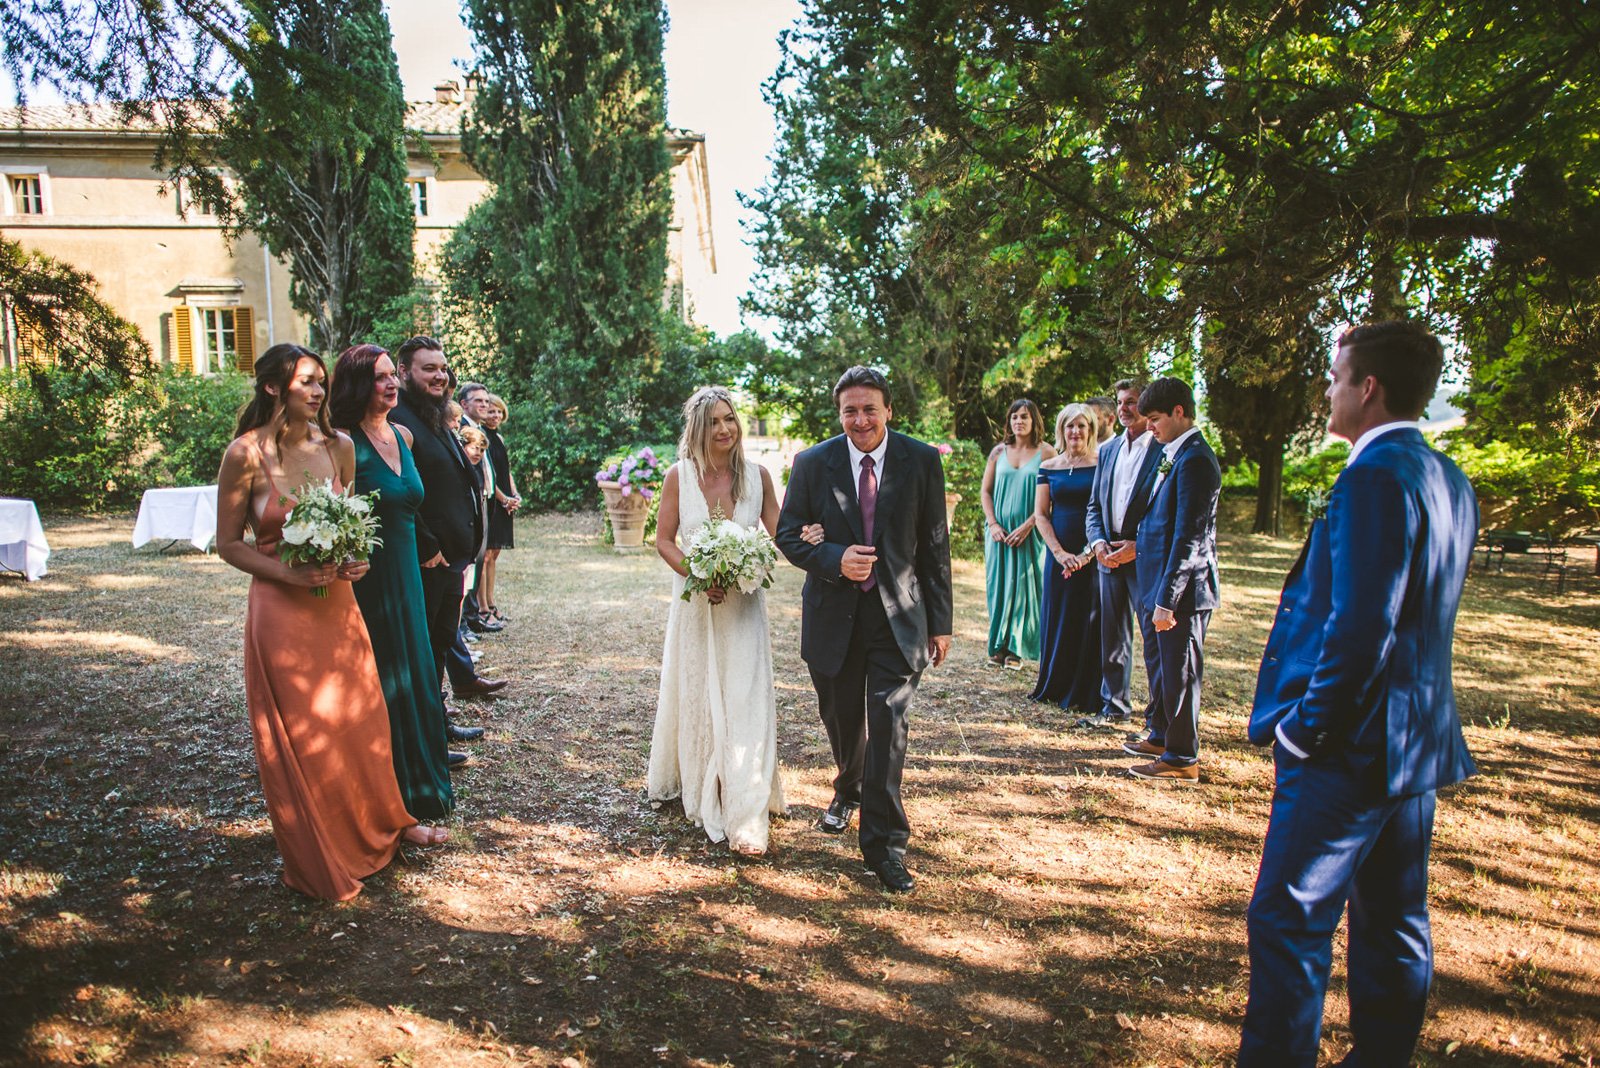 A+L Wedding at Montechiaro, Siena by Federico Pannacci 49